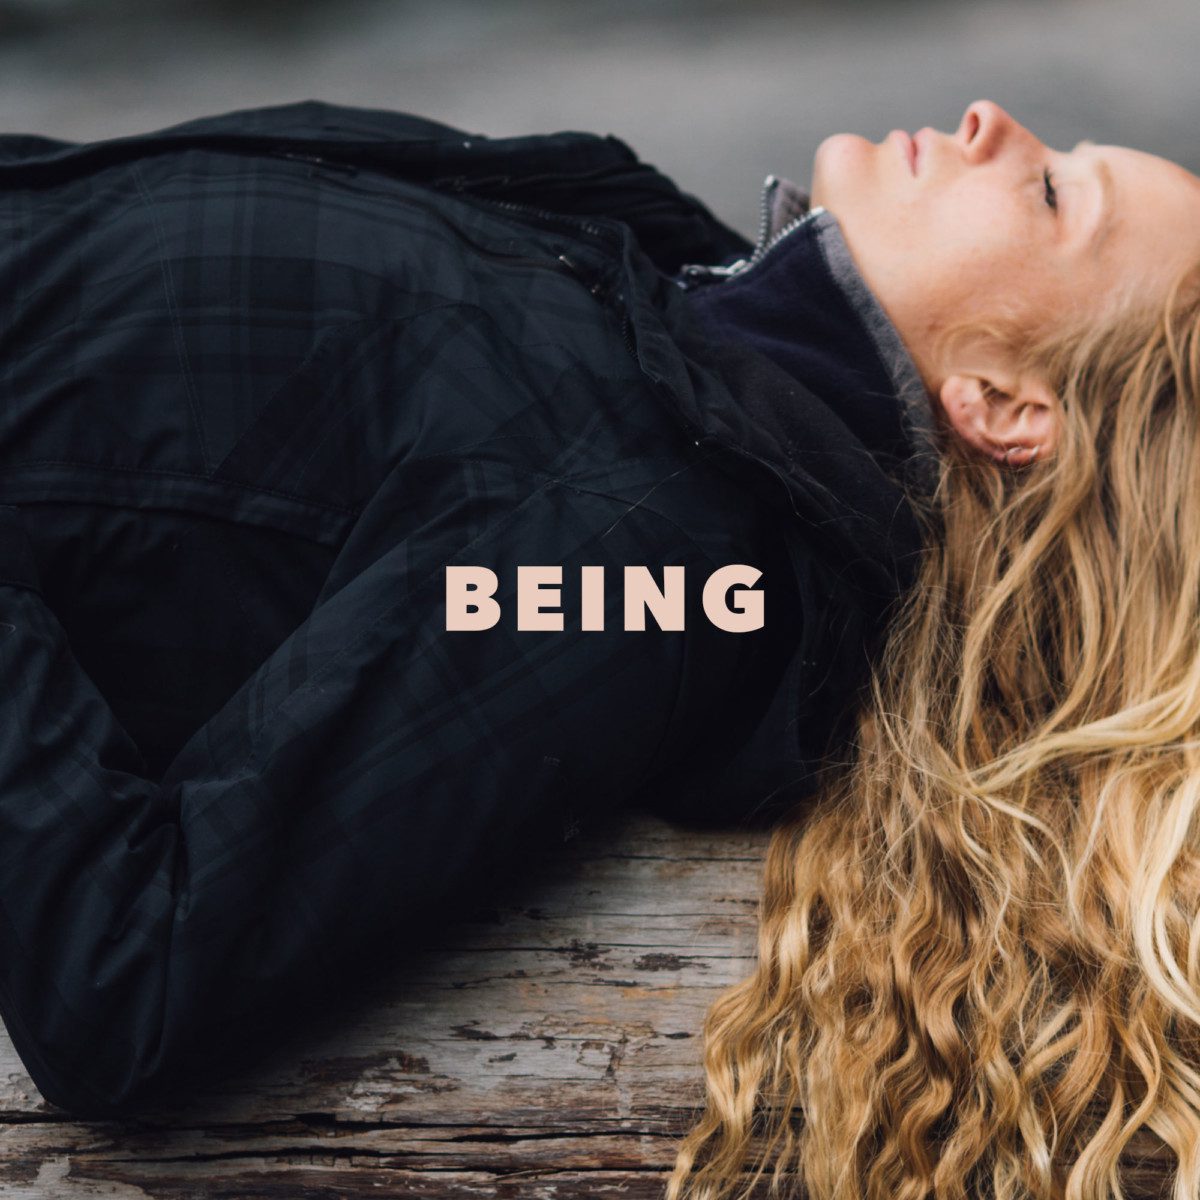 BEING – enjoying what is